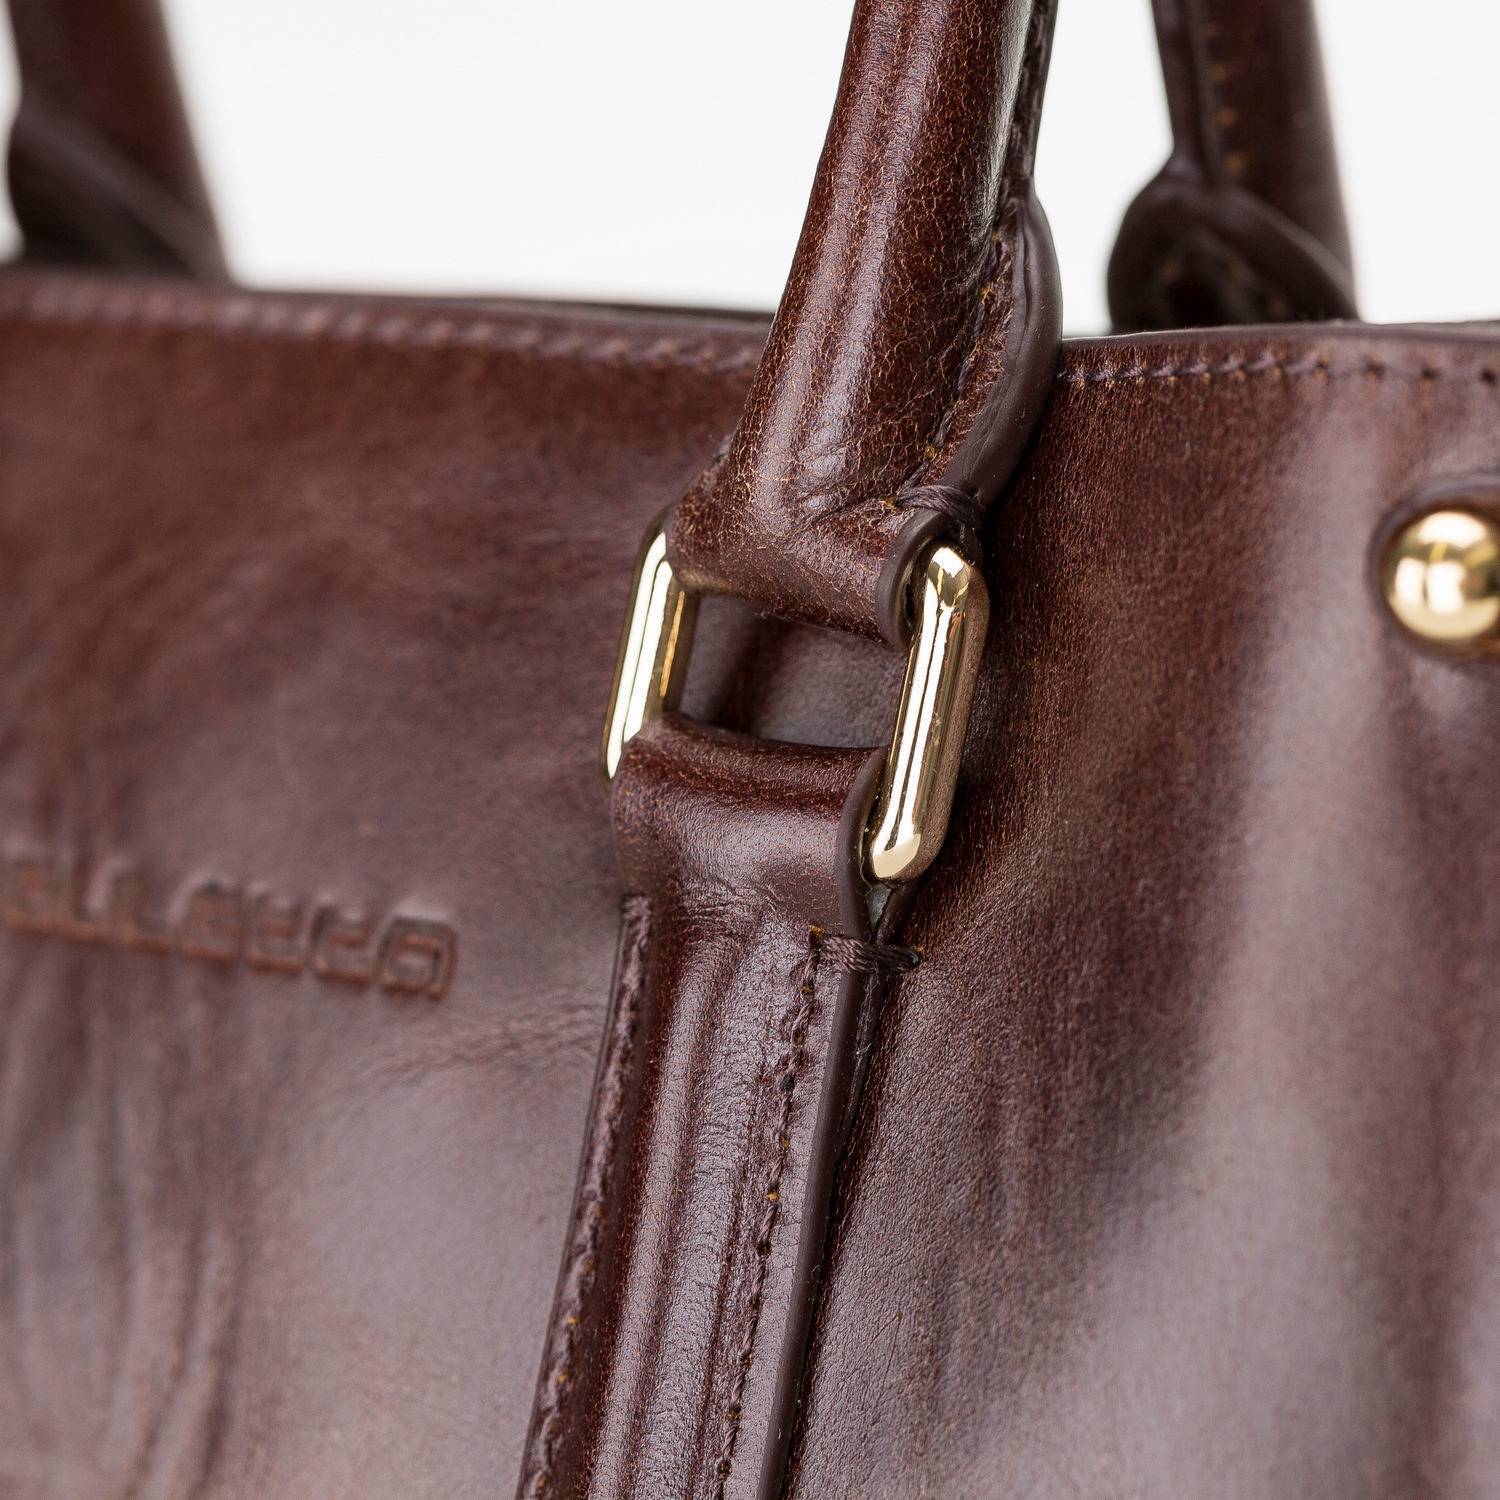 Handbag Lara Small Leather Women’s Handbag | Women's Bag - Brown Color Bouletta Shop